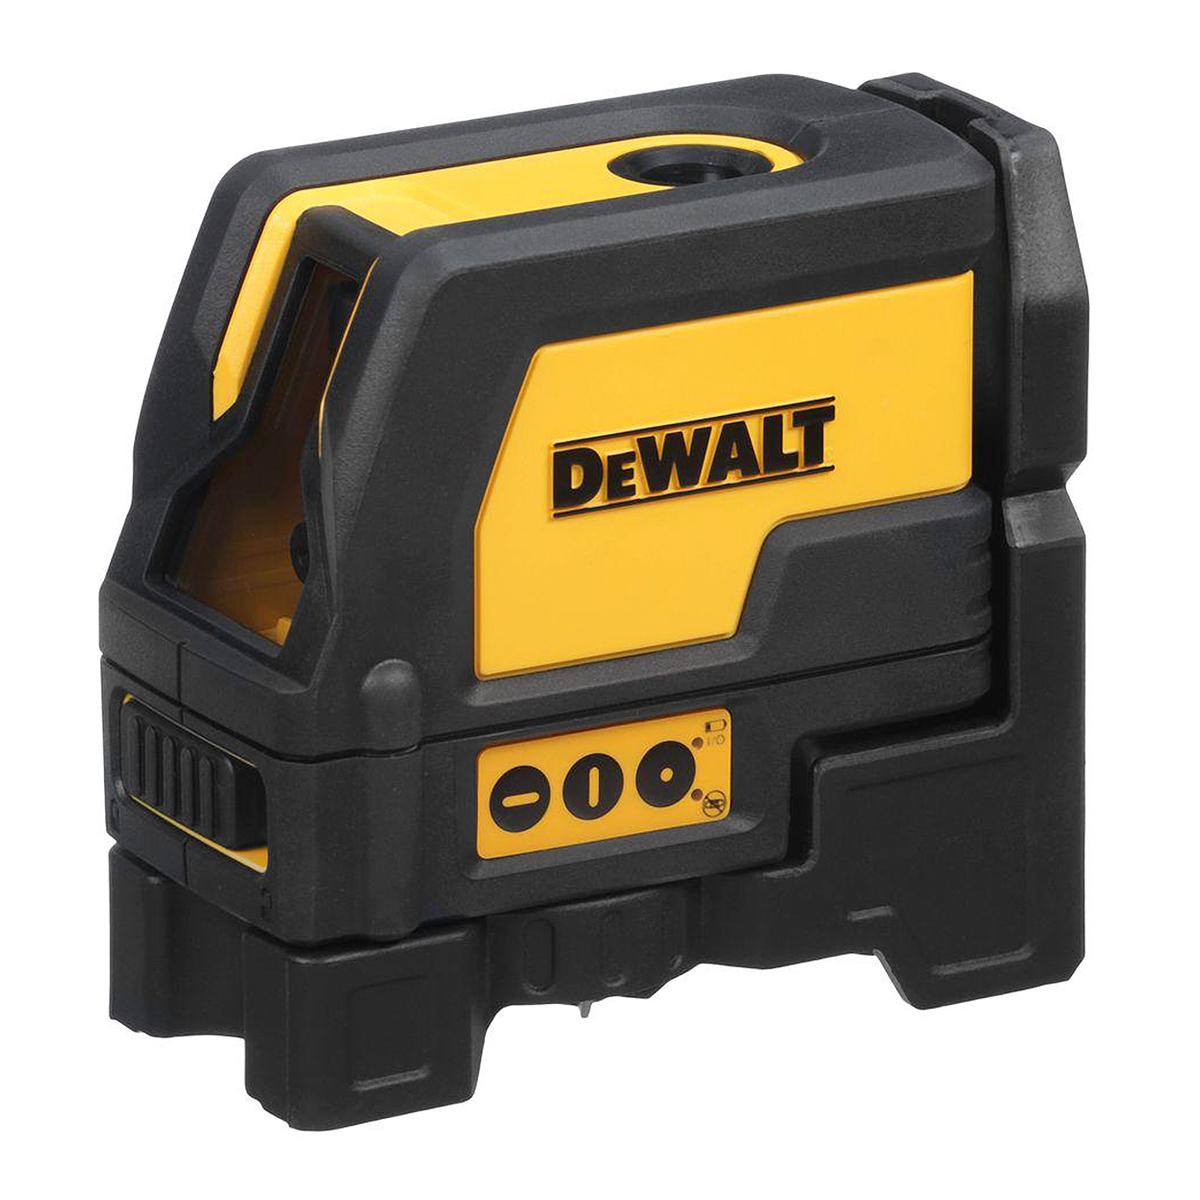 DEWALT DW0822 Laser Autonivelante Linea Punto Horizontal y Vertical